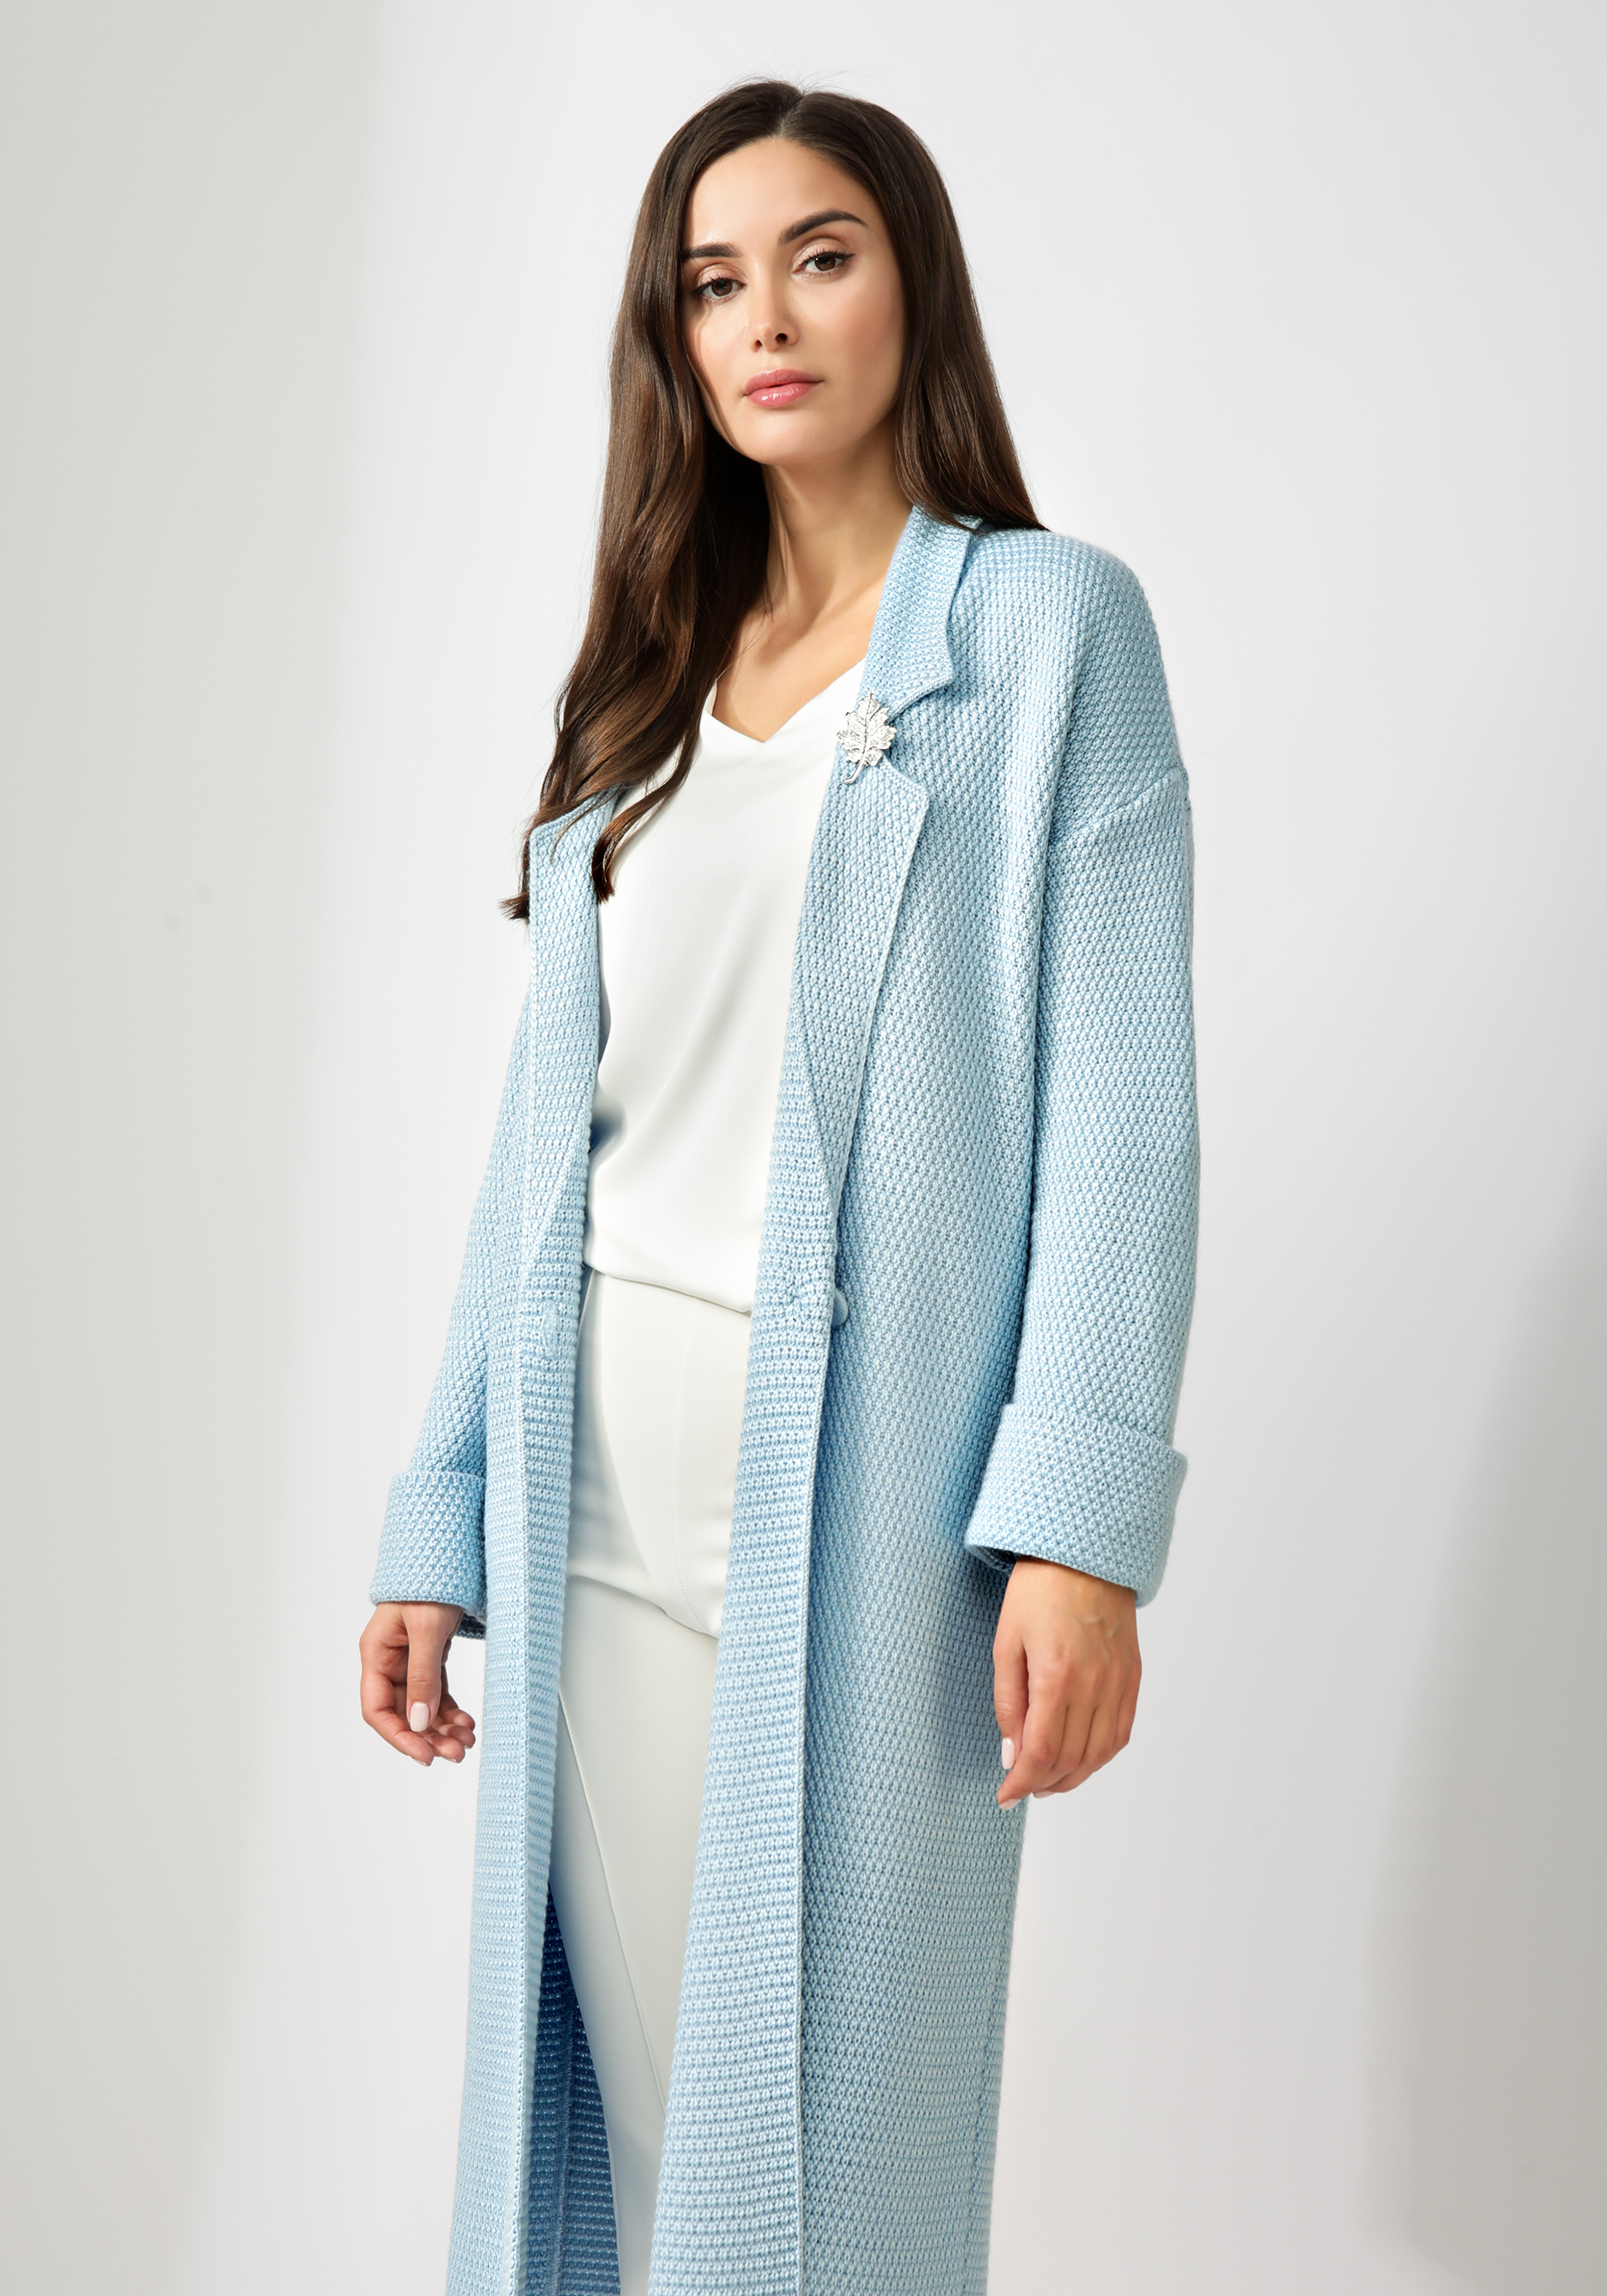 Пальто женское структурной вязки Vivawool, цвет серый, размер 58